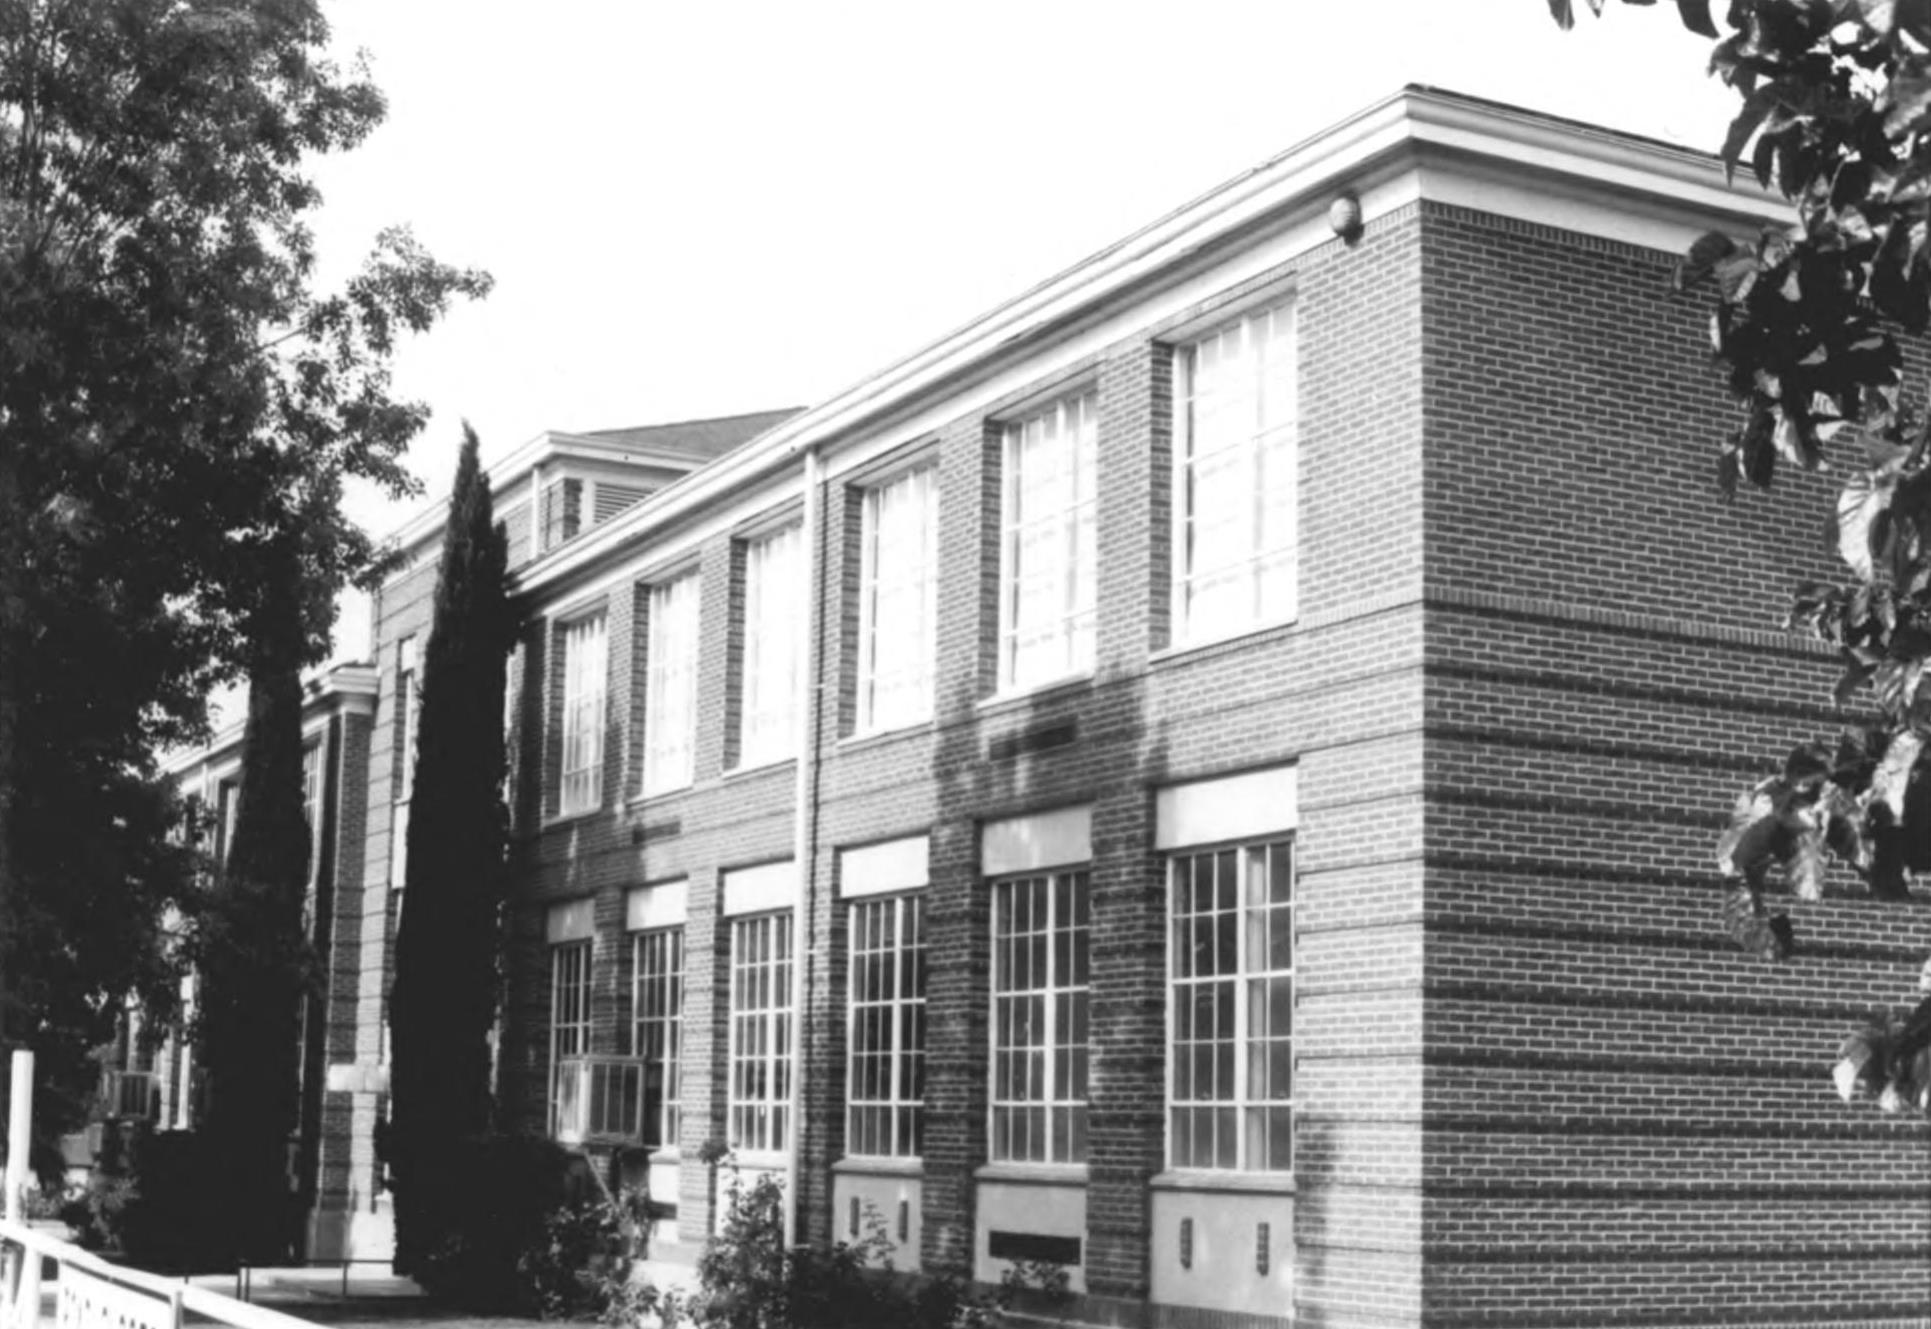 Northeast corner of St. George Elementary School